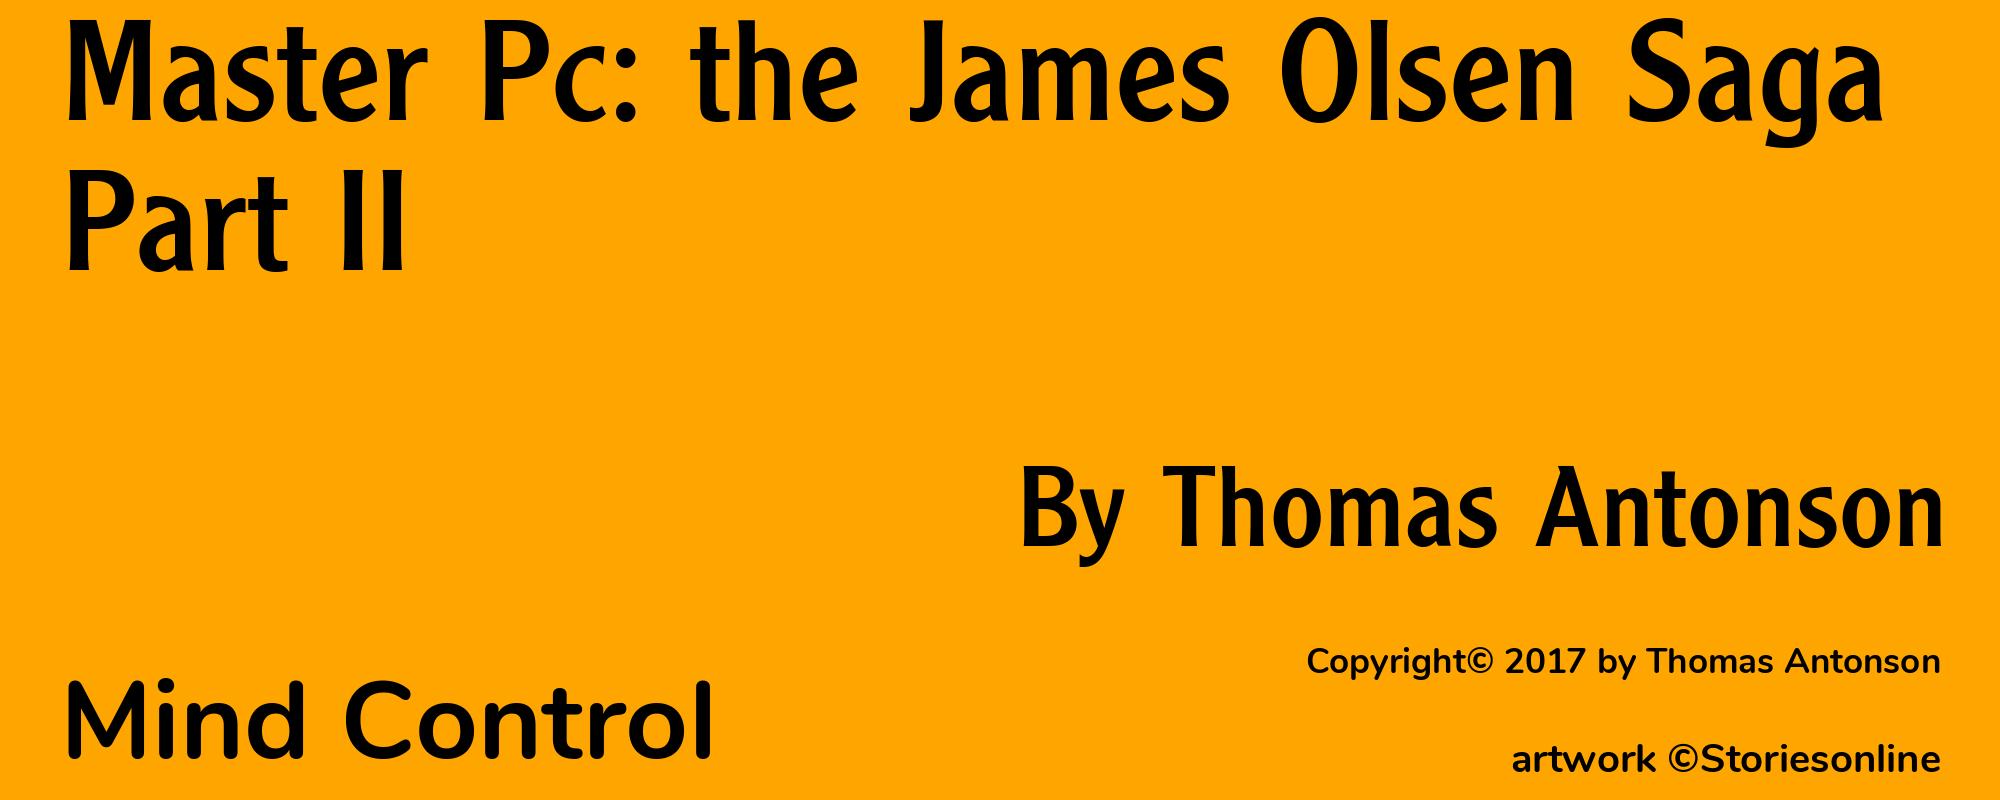 Master Pc: the James Olsen Saga Part II - Cover